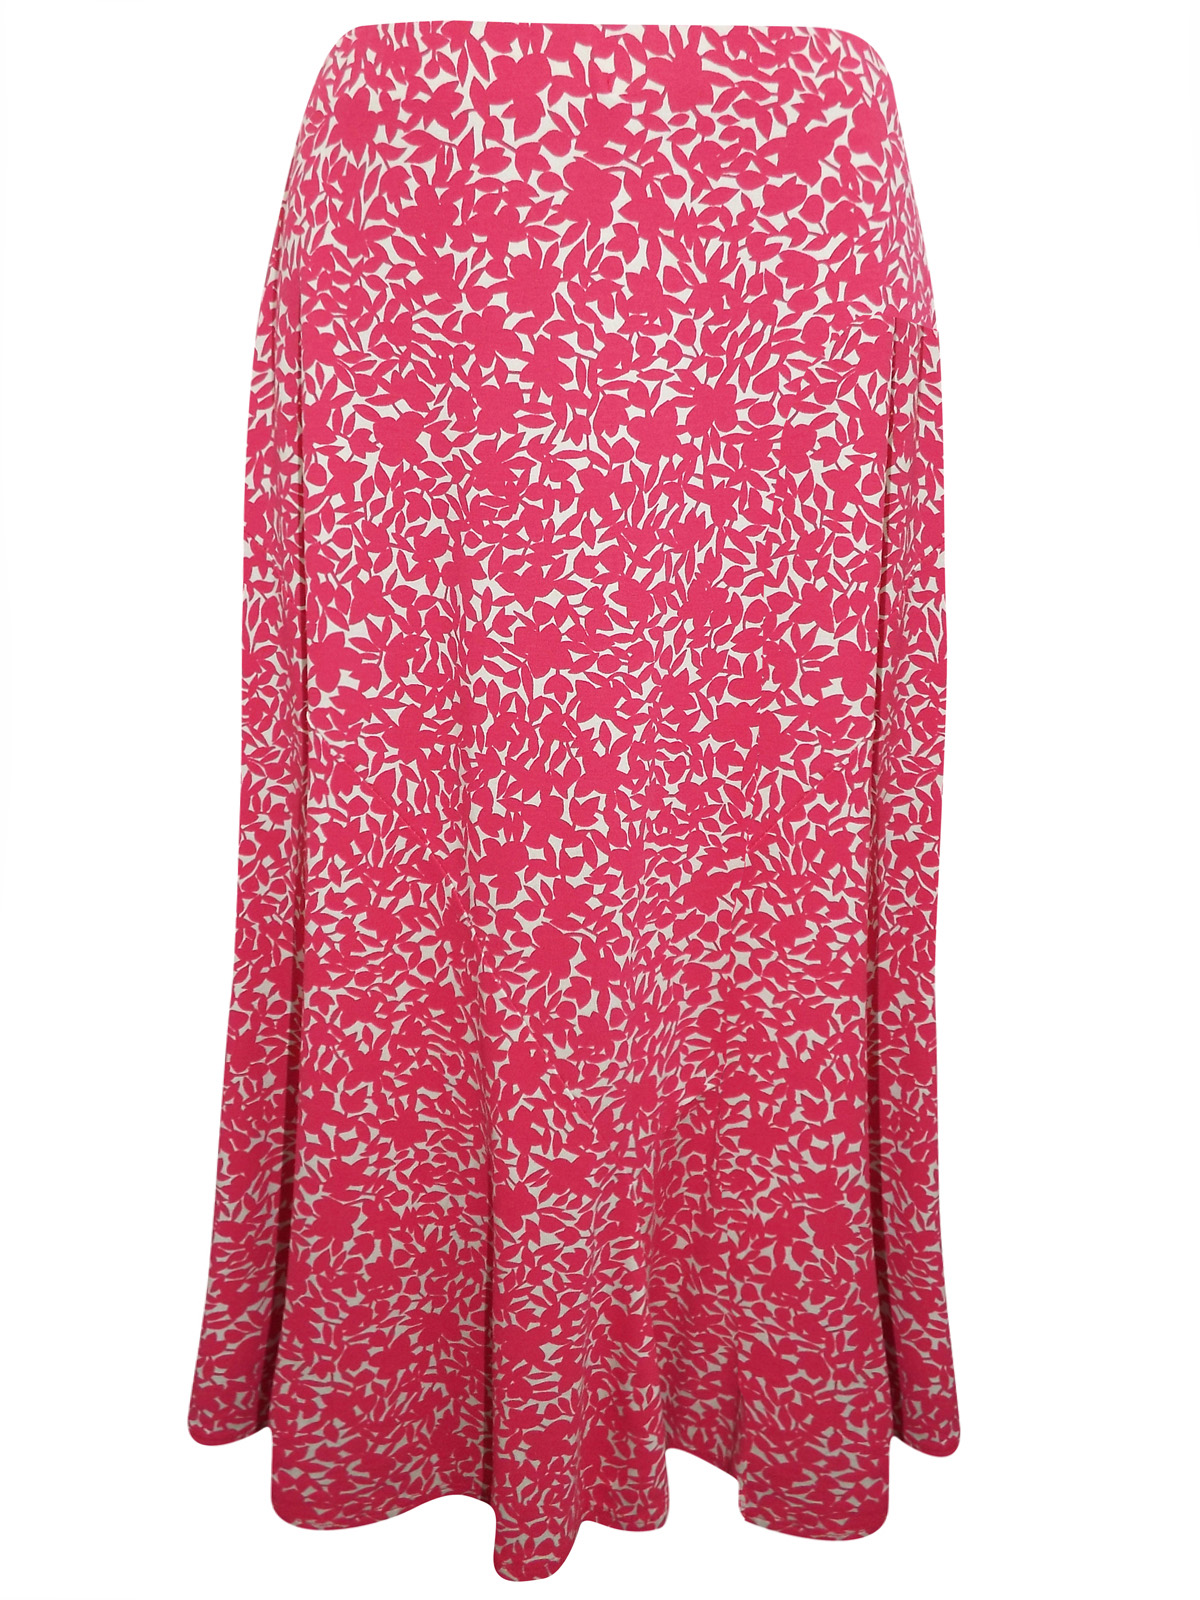 First Avenue AZALEA Floral Print Jersey Midi Skirt - Size 10 to 18